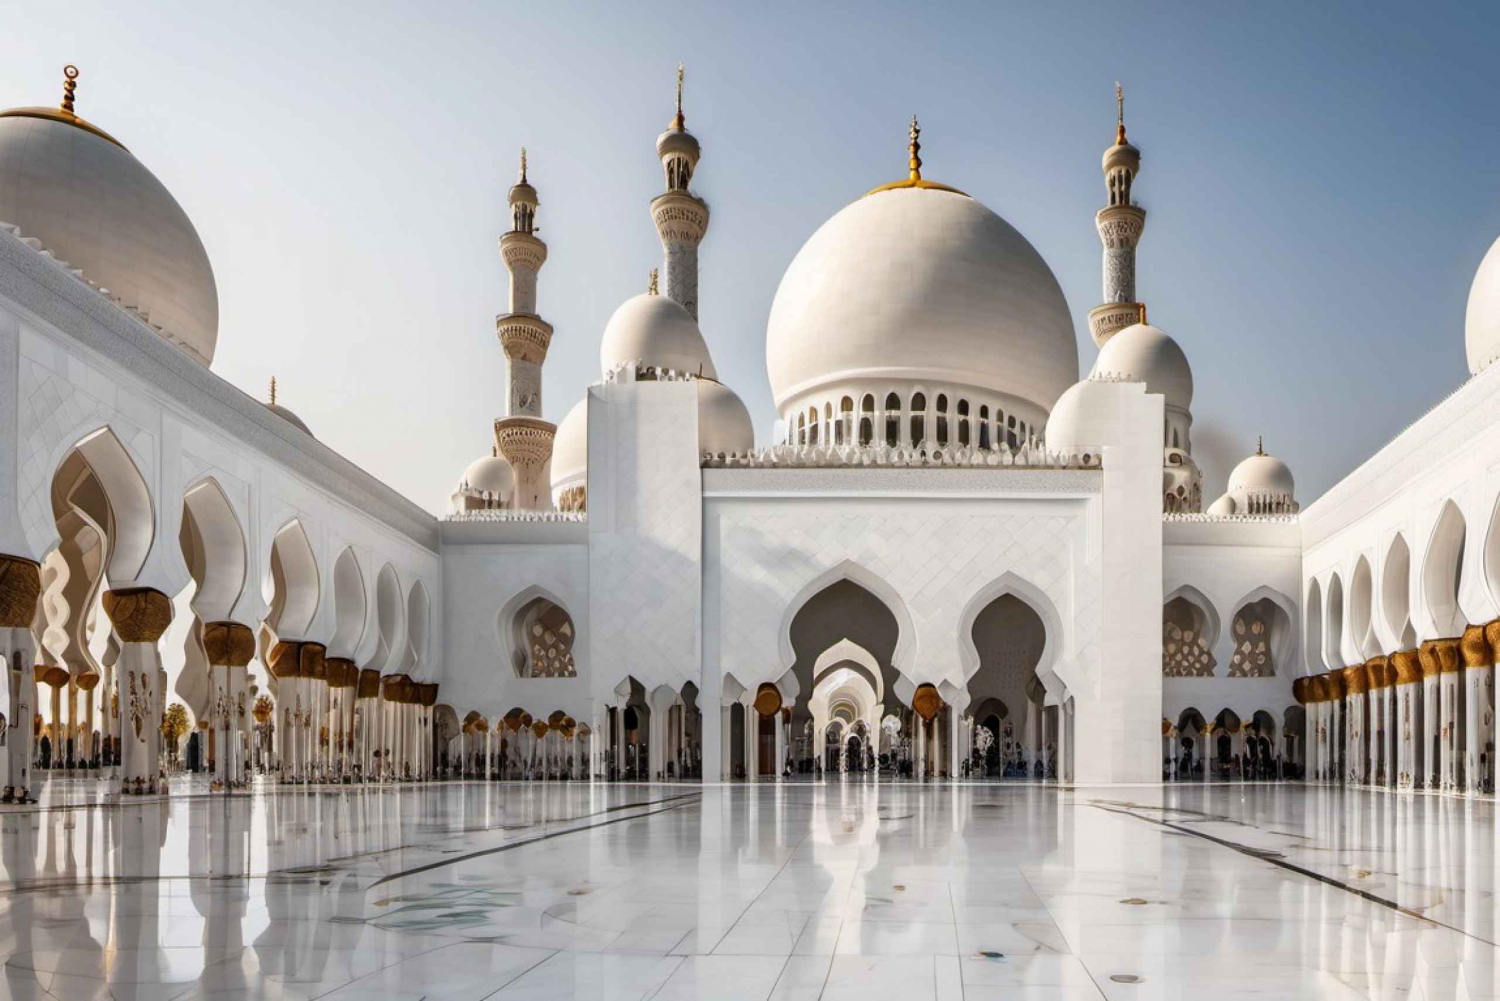 From Dubai: Great Grand Mosque & Ferrari world Day Trip